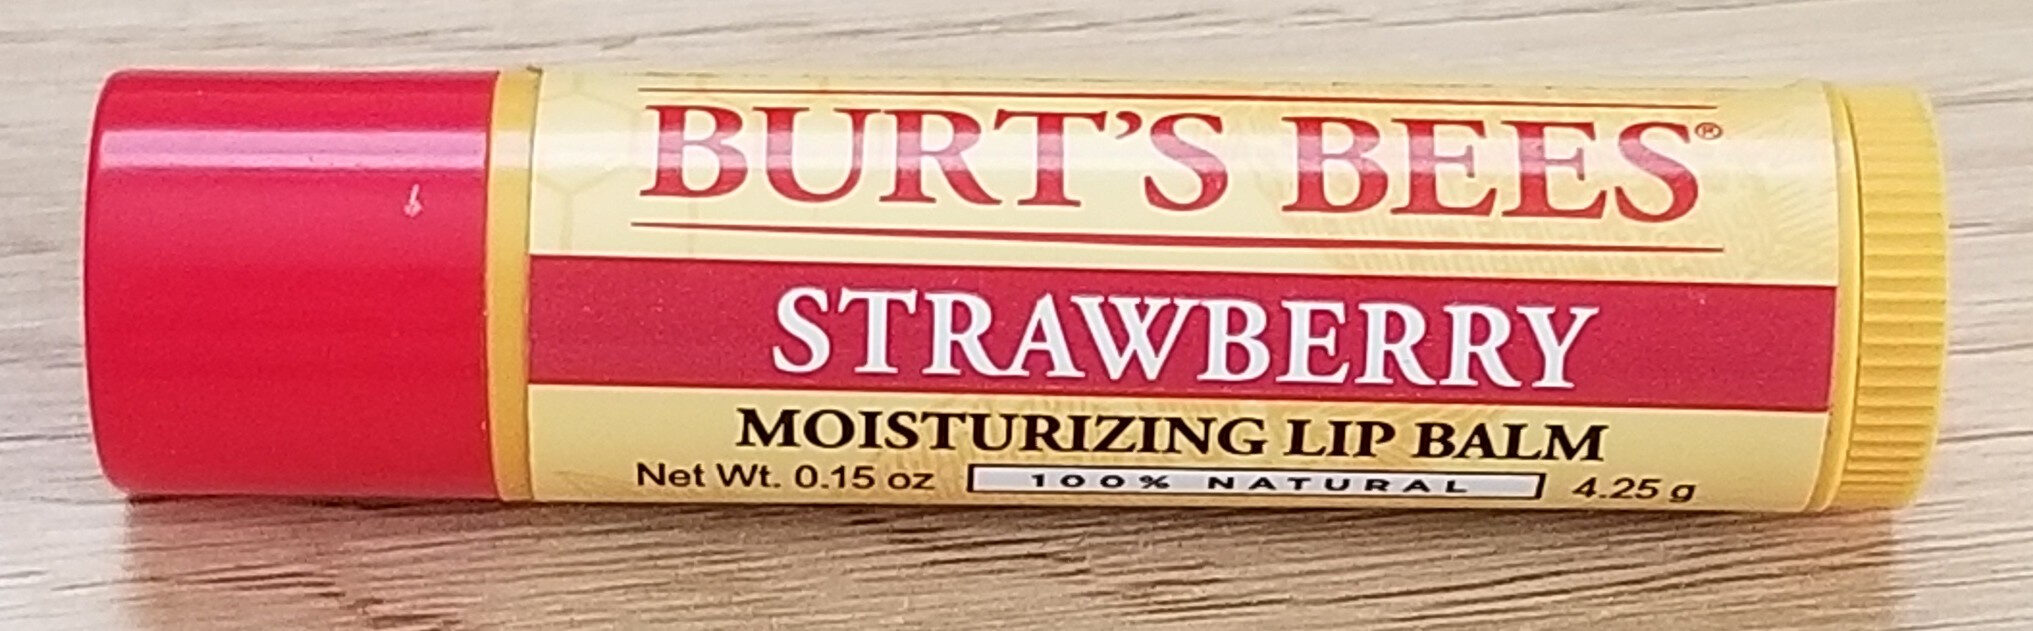 Strawberry Moisturizing Lip Balm - Produkto - en